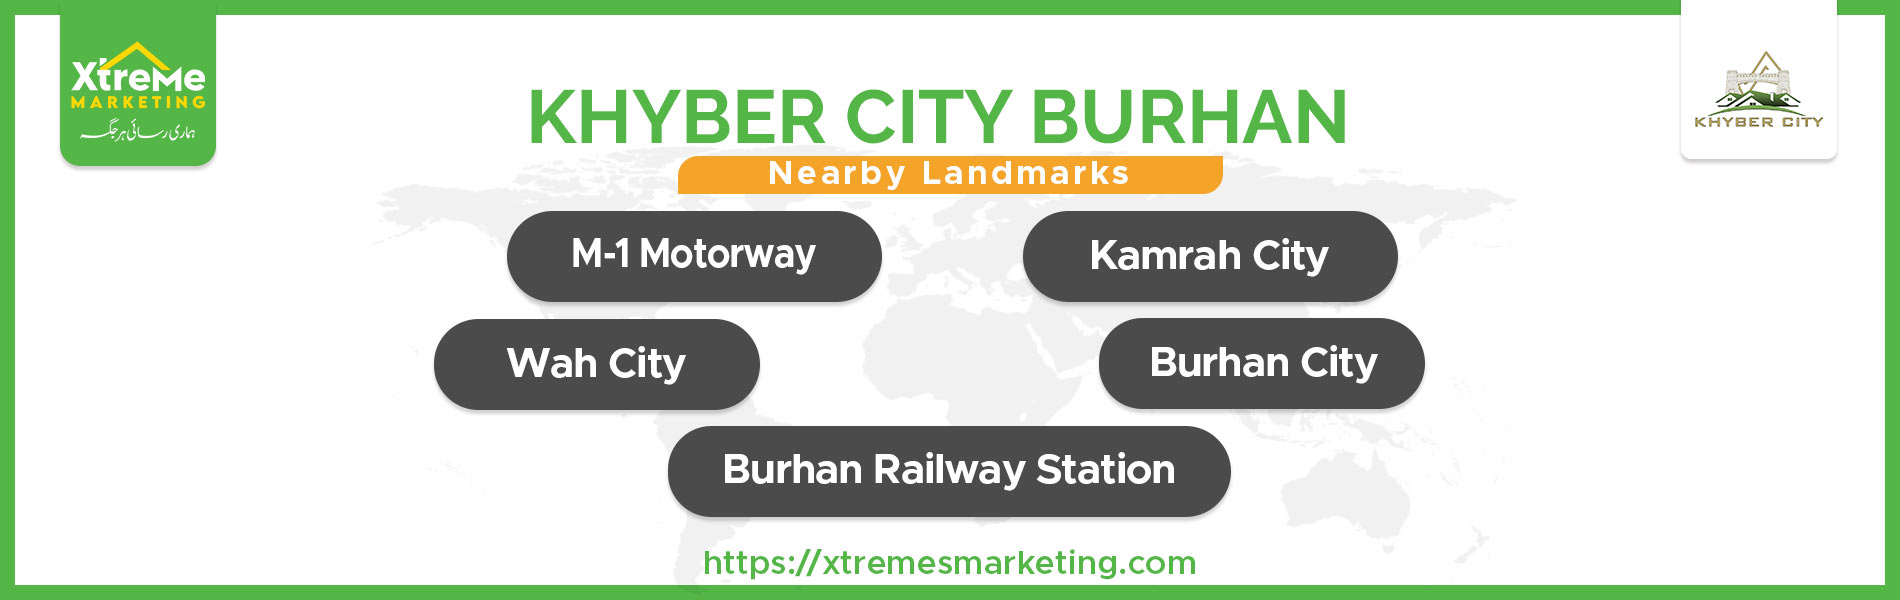 Khyber City Burhan NEARBY landmarks